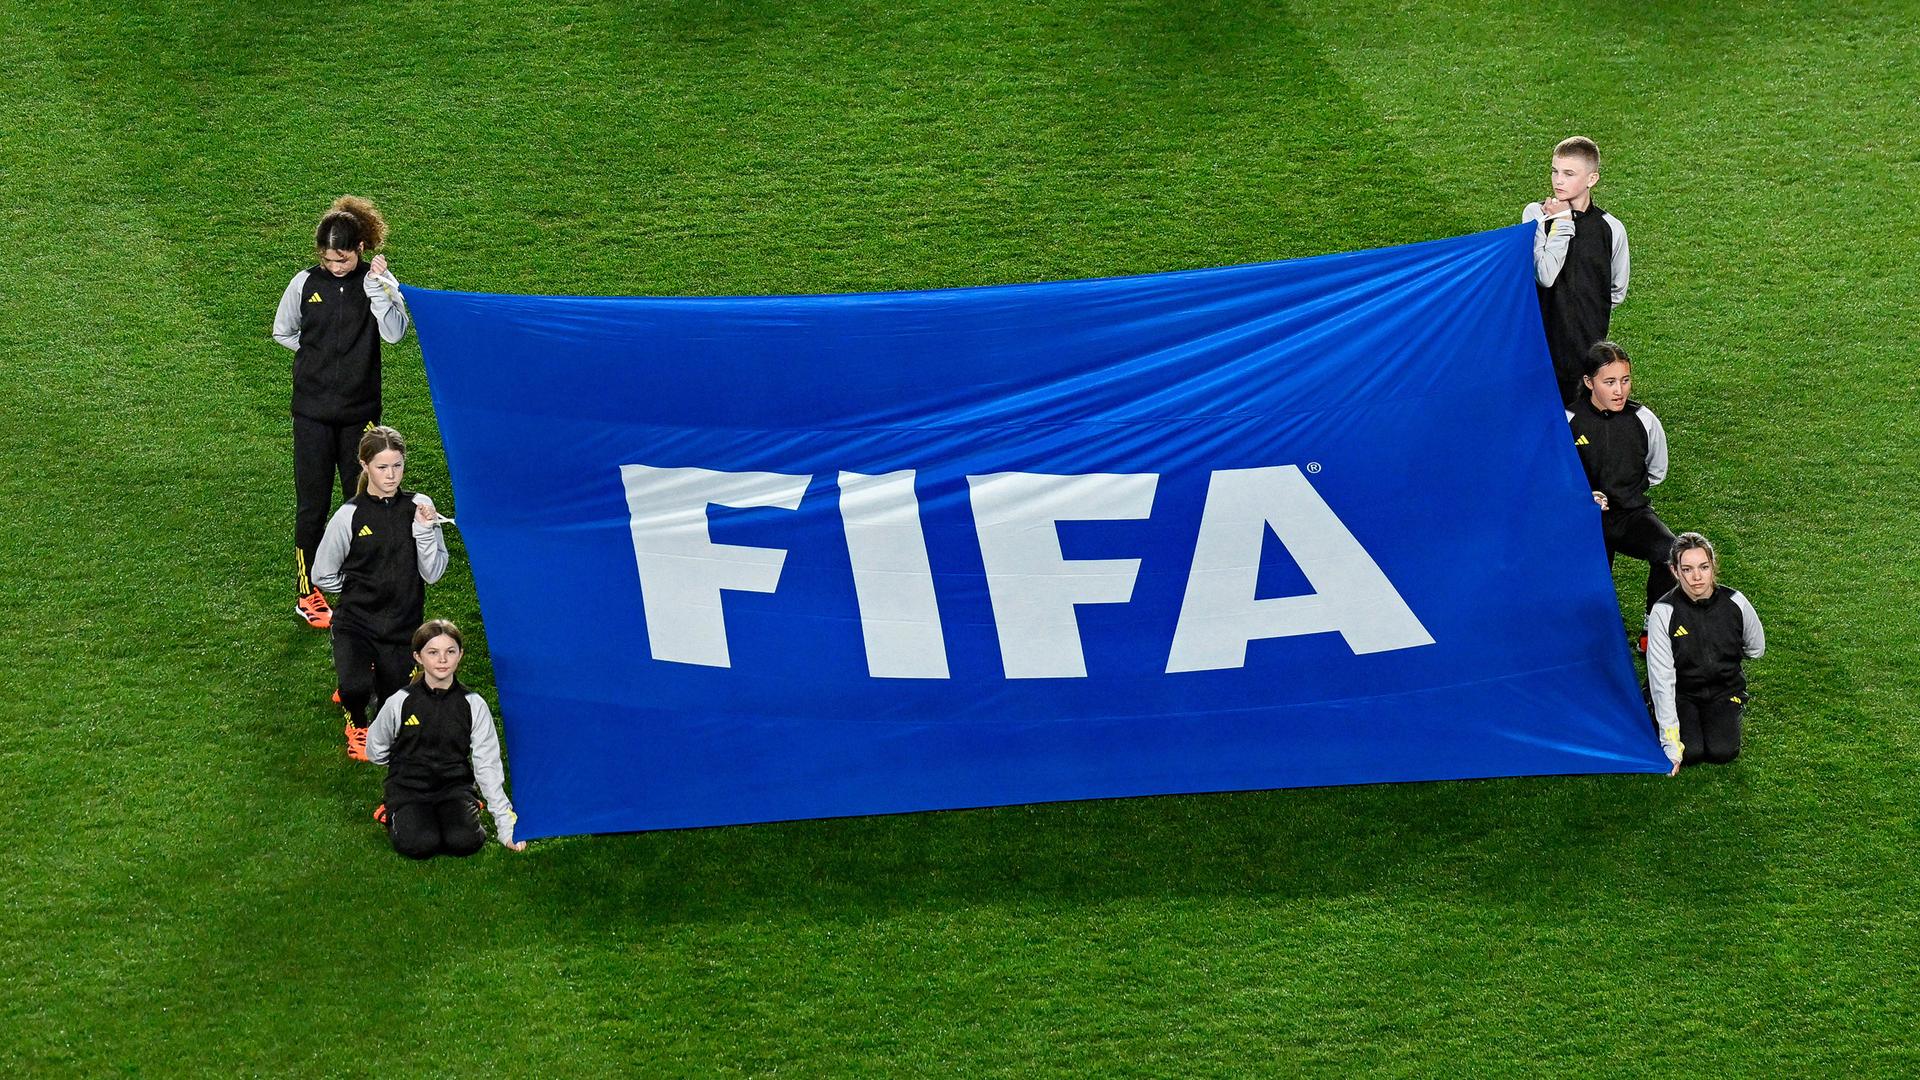 Die FIFA-Flagge